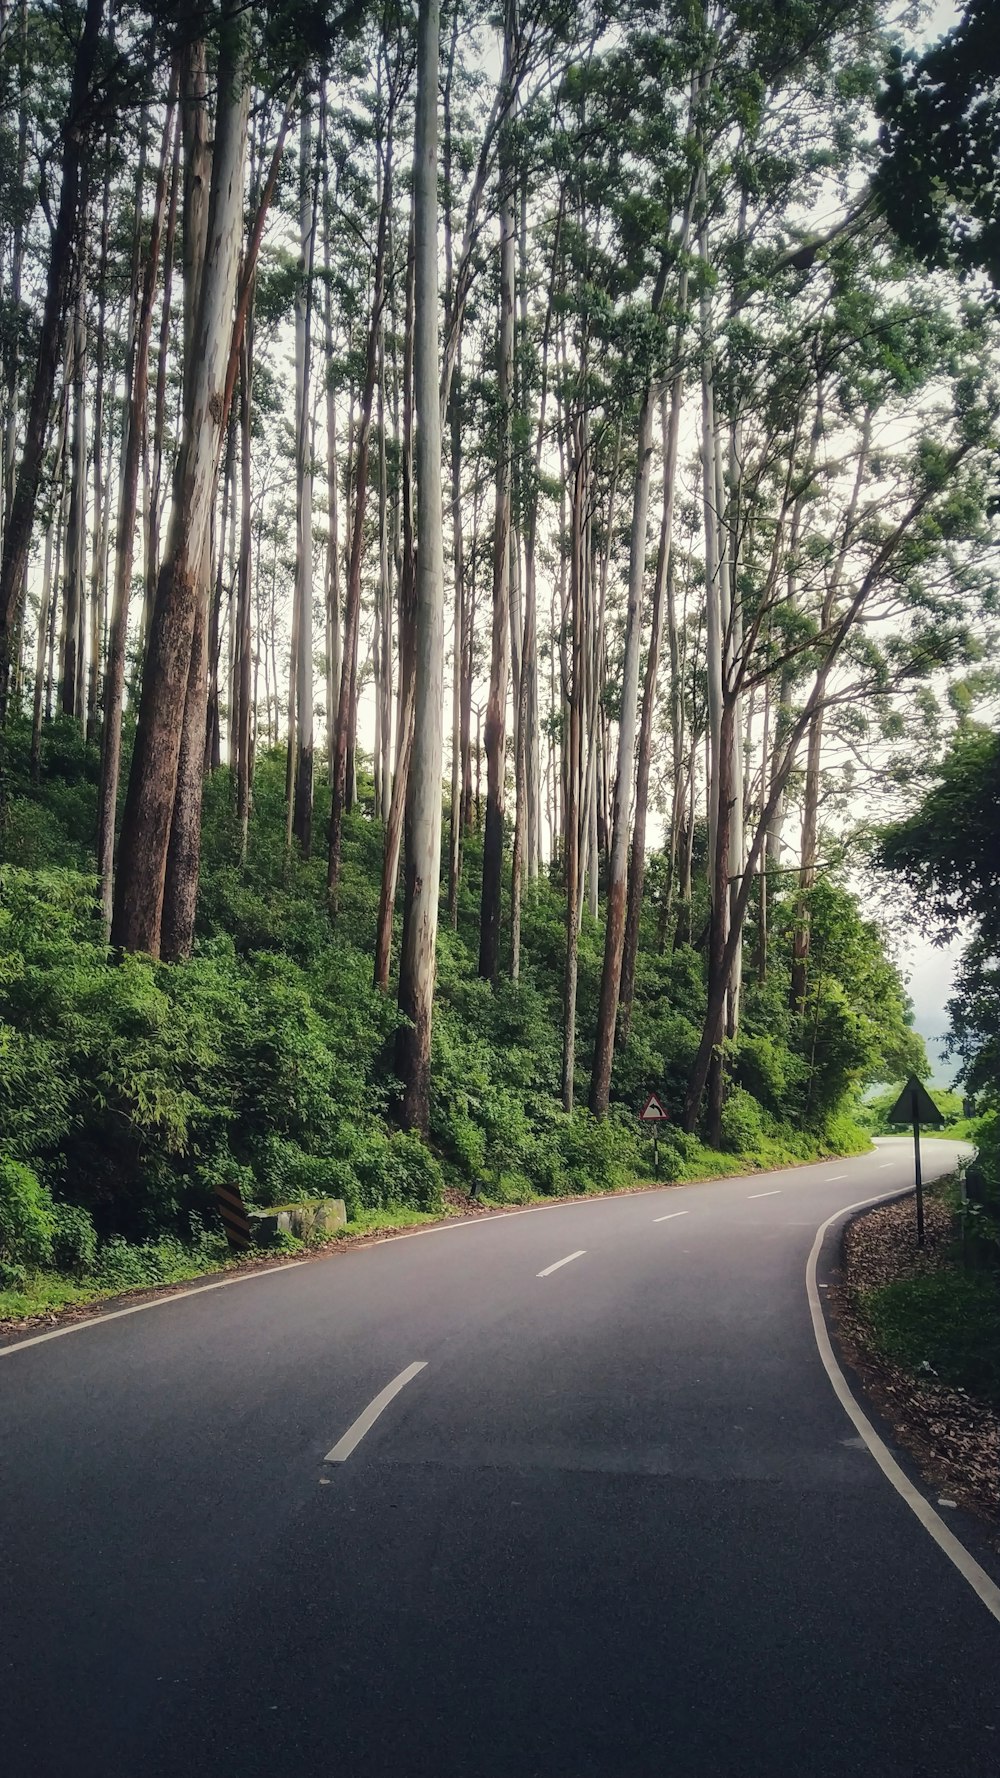 strada asfaltata vuota circondata da alberi